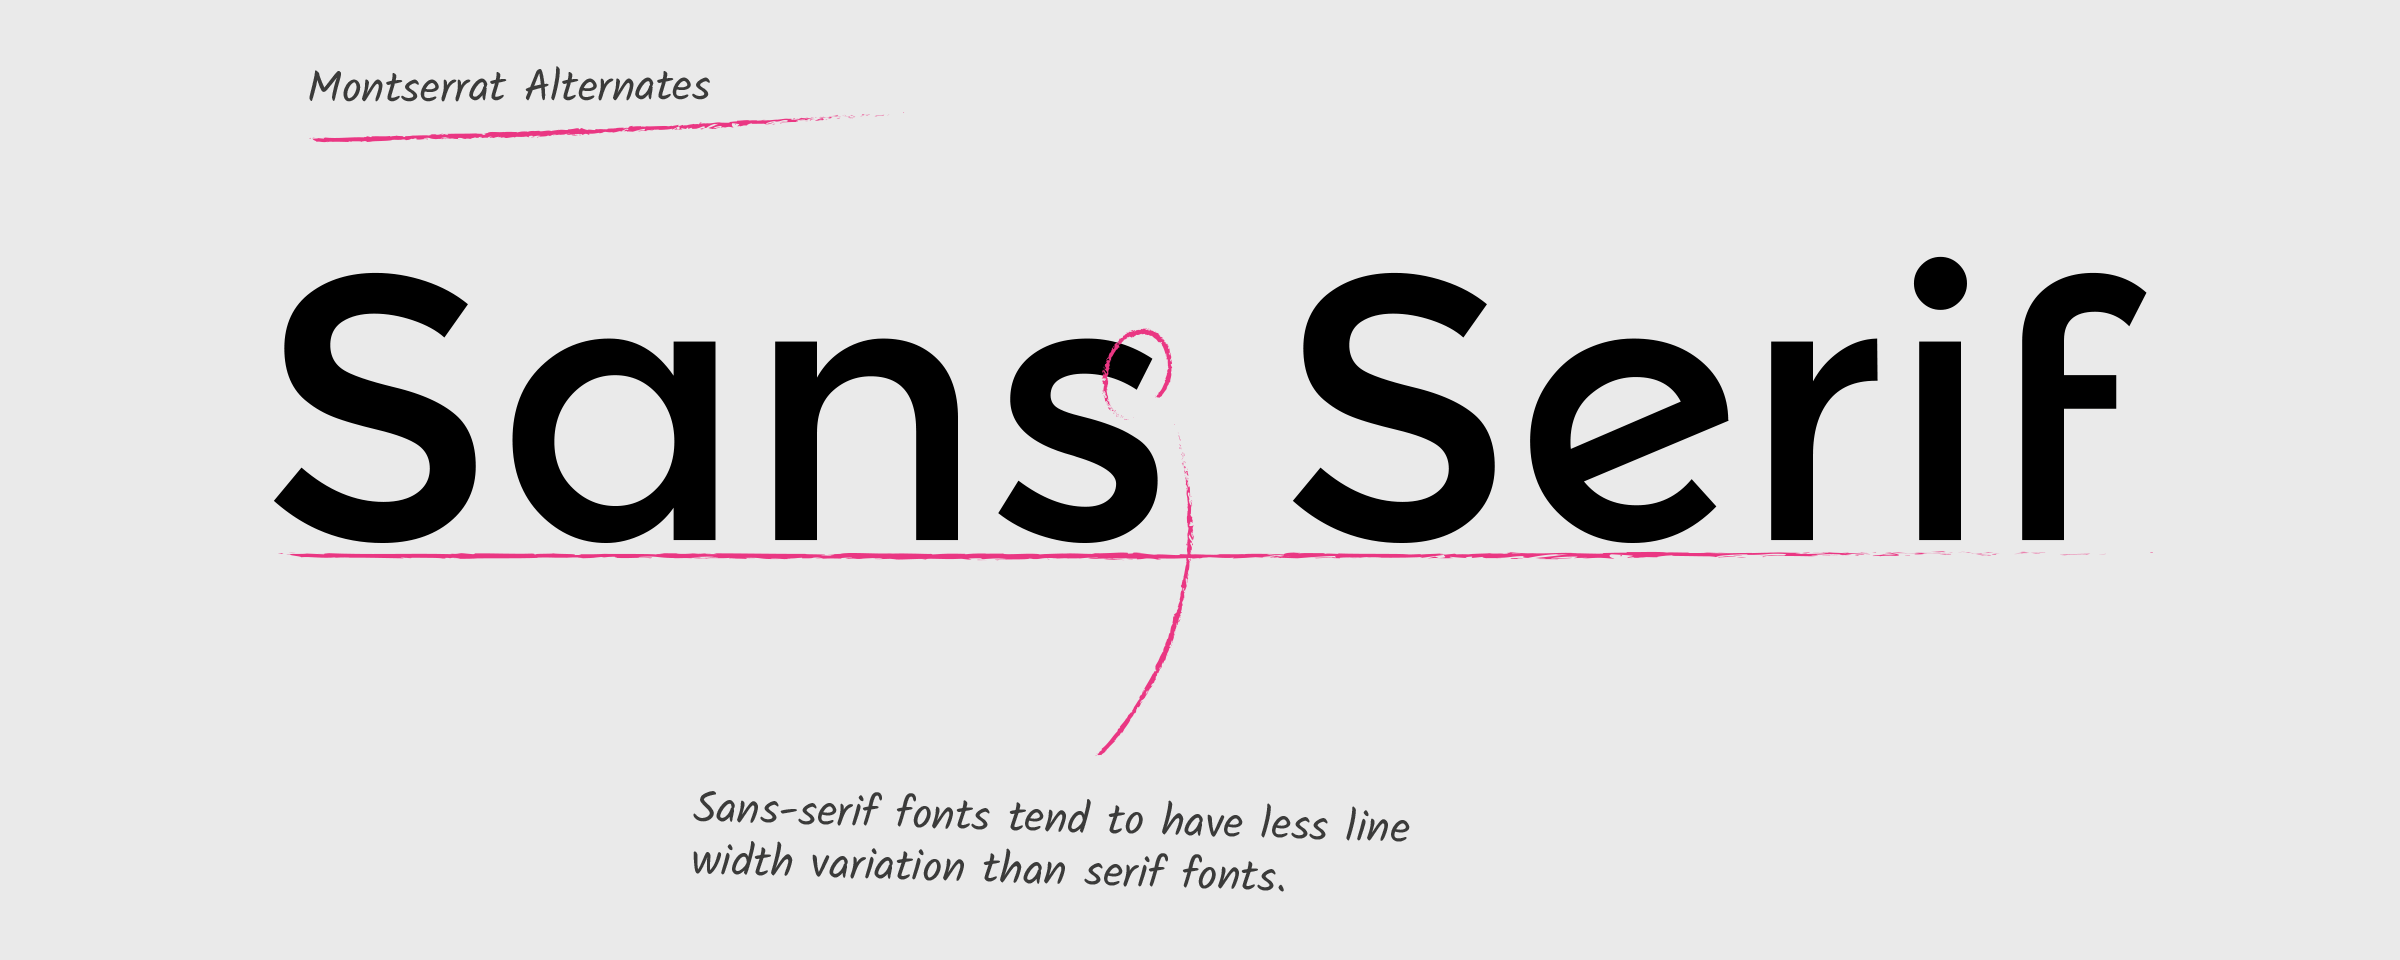 Sans Serif Logo - Reinvent your brand or Sans Serif?